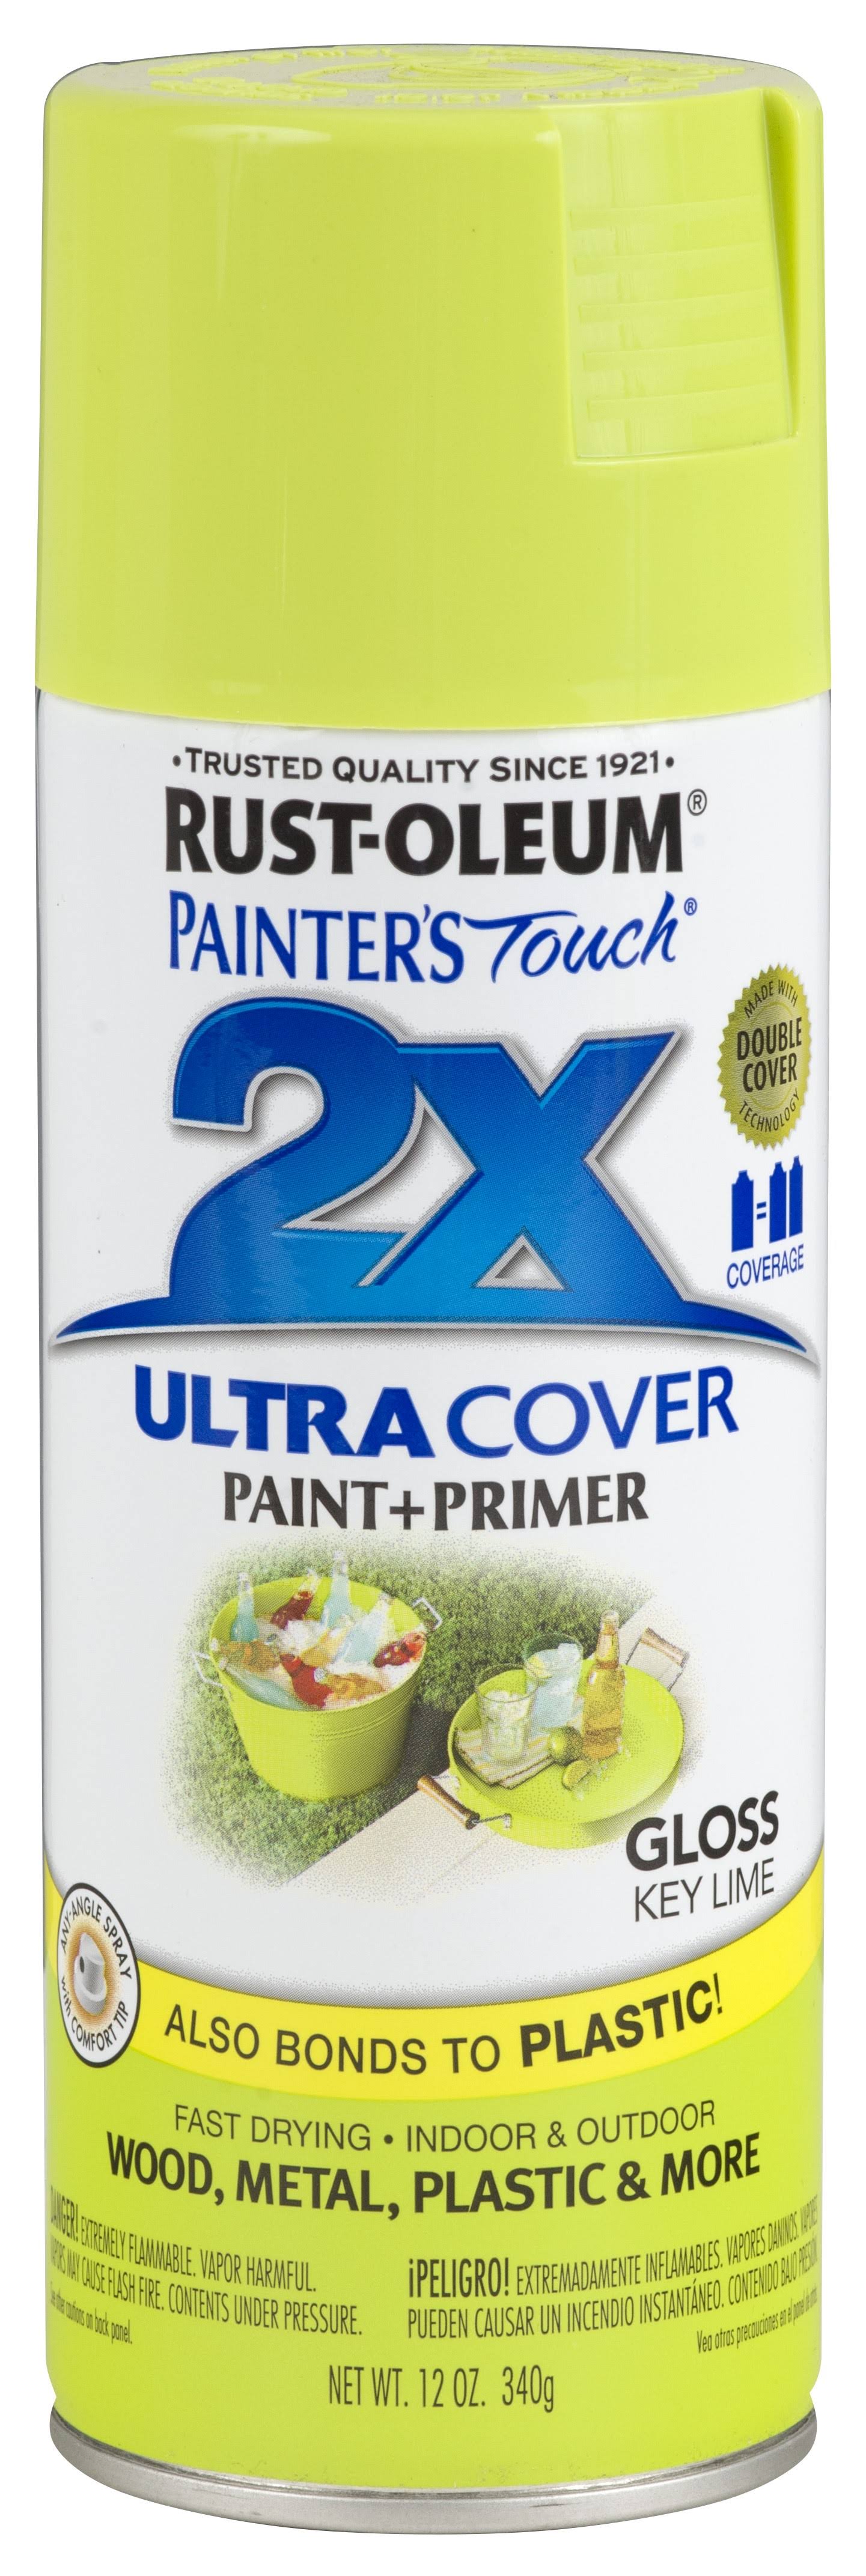 Rust-Oleum Painter's Touch Multi-Purpose Spray Paint - Gloss Key Lime, 12oz